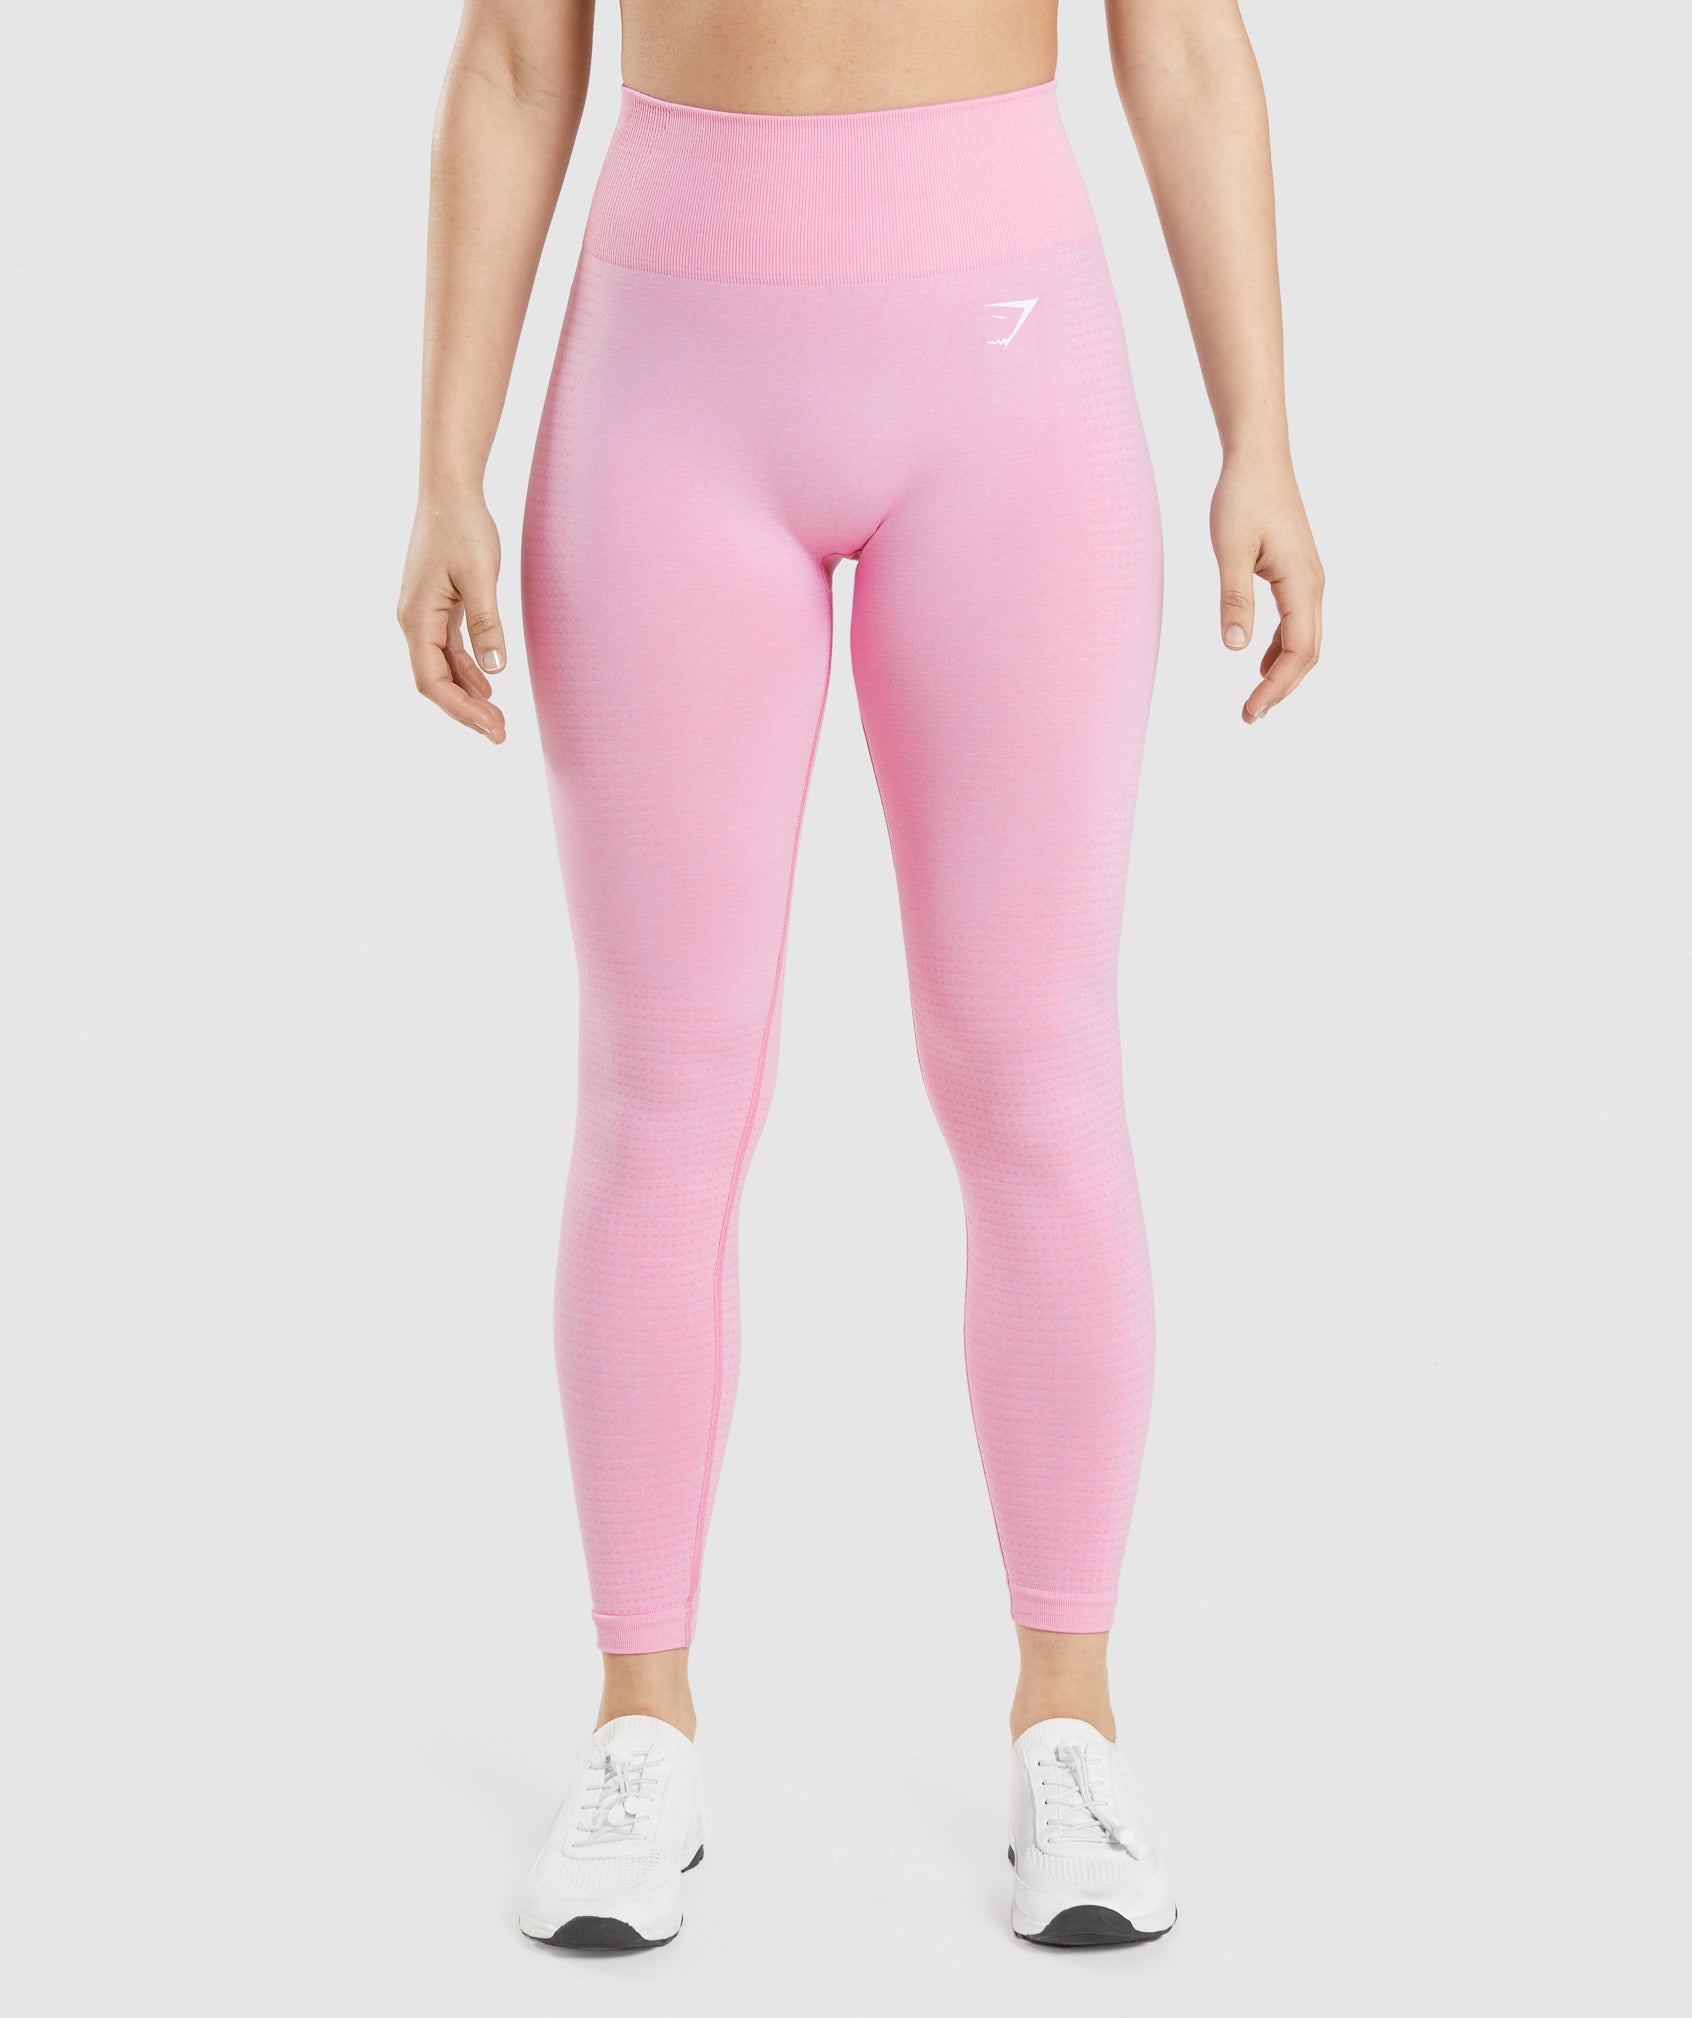 Pink Leggings & Pink Tights, Pink Pants